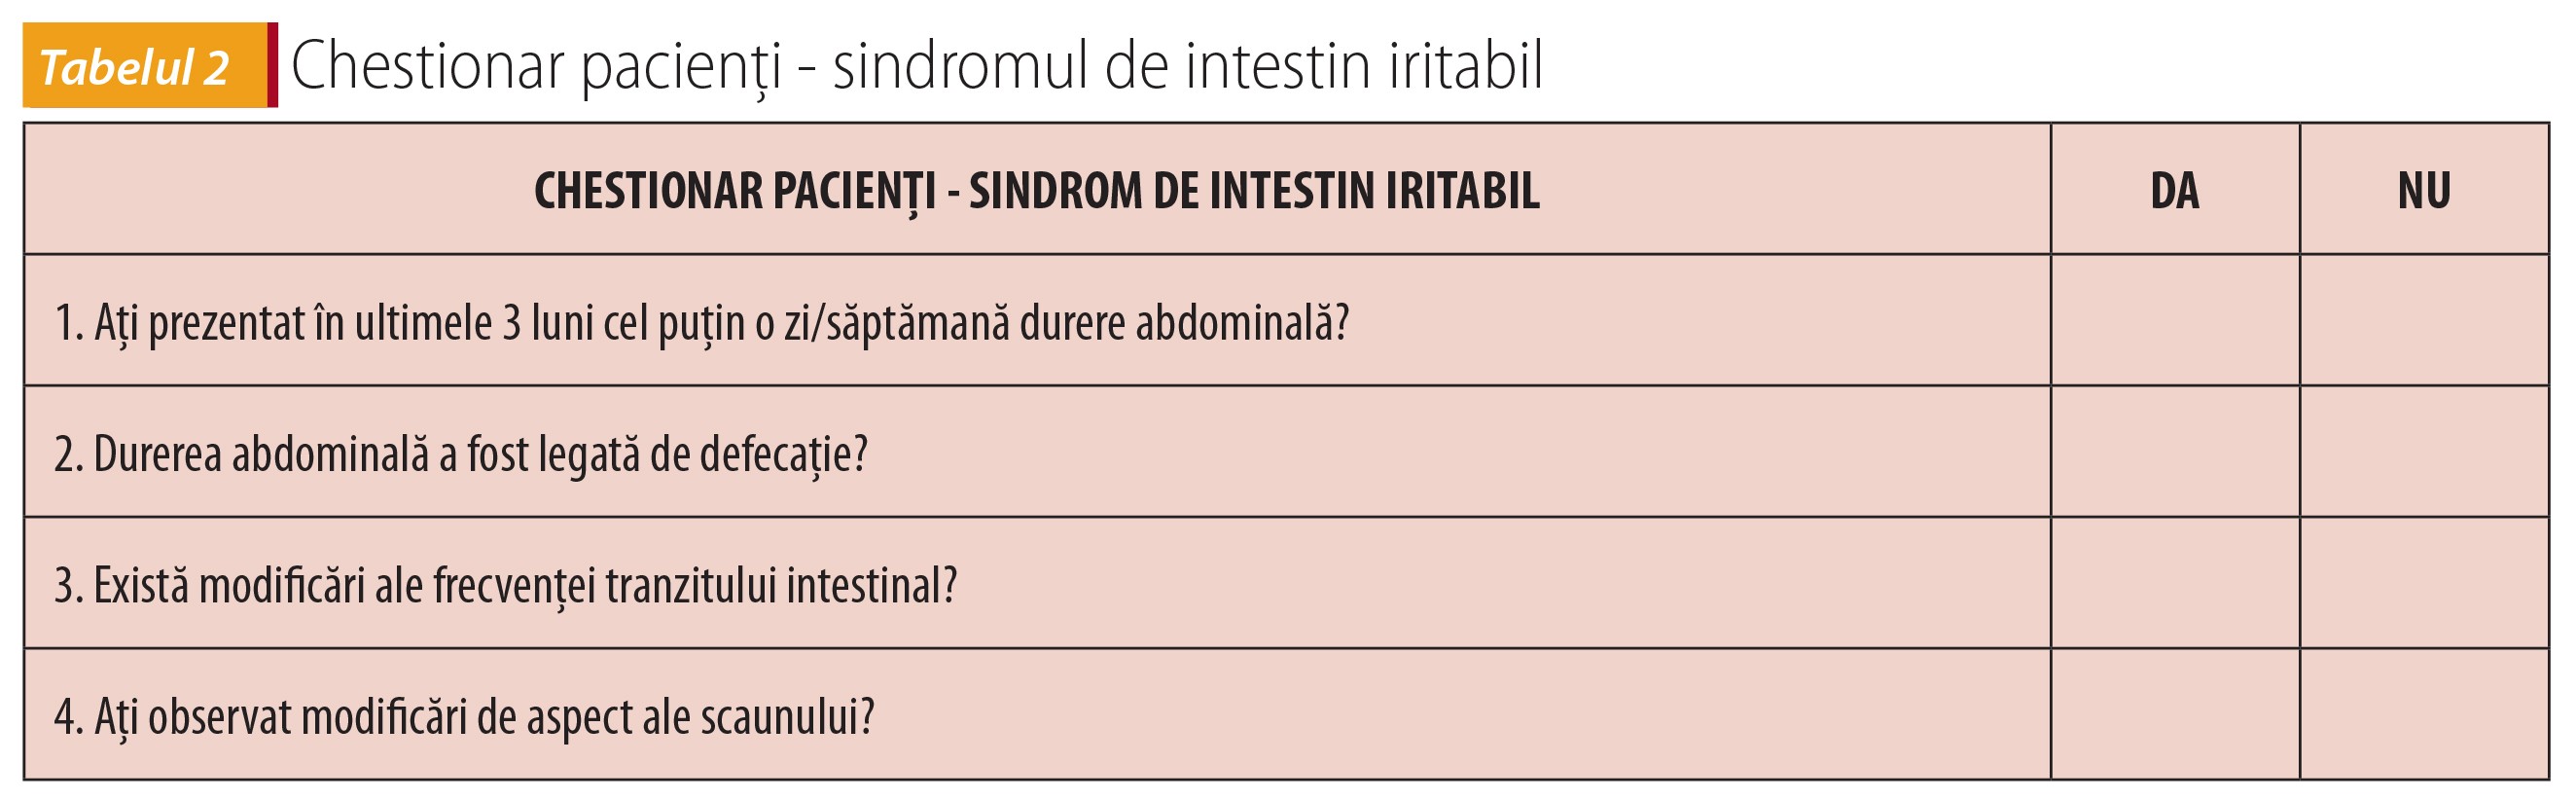 Tabelul 2; Chestionar pacienți - sindromul de intestin iritabil